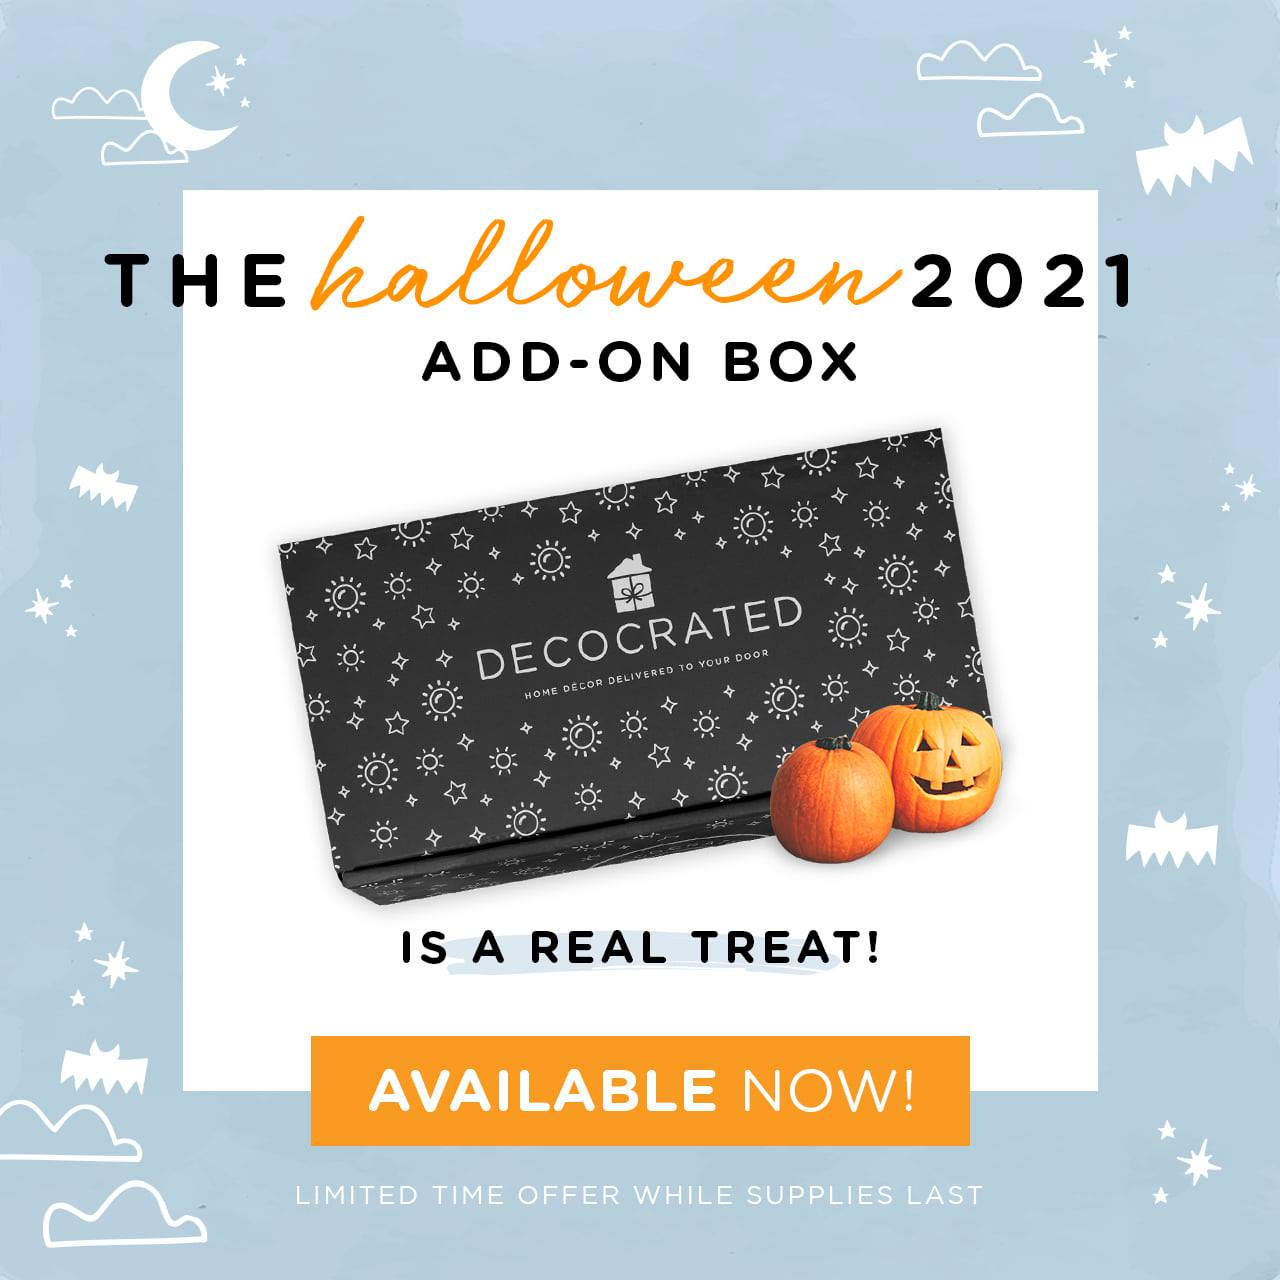 Decocrated Halloween AddOn Box 2021 Full Spoilers! Hello Subscription